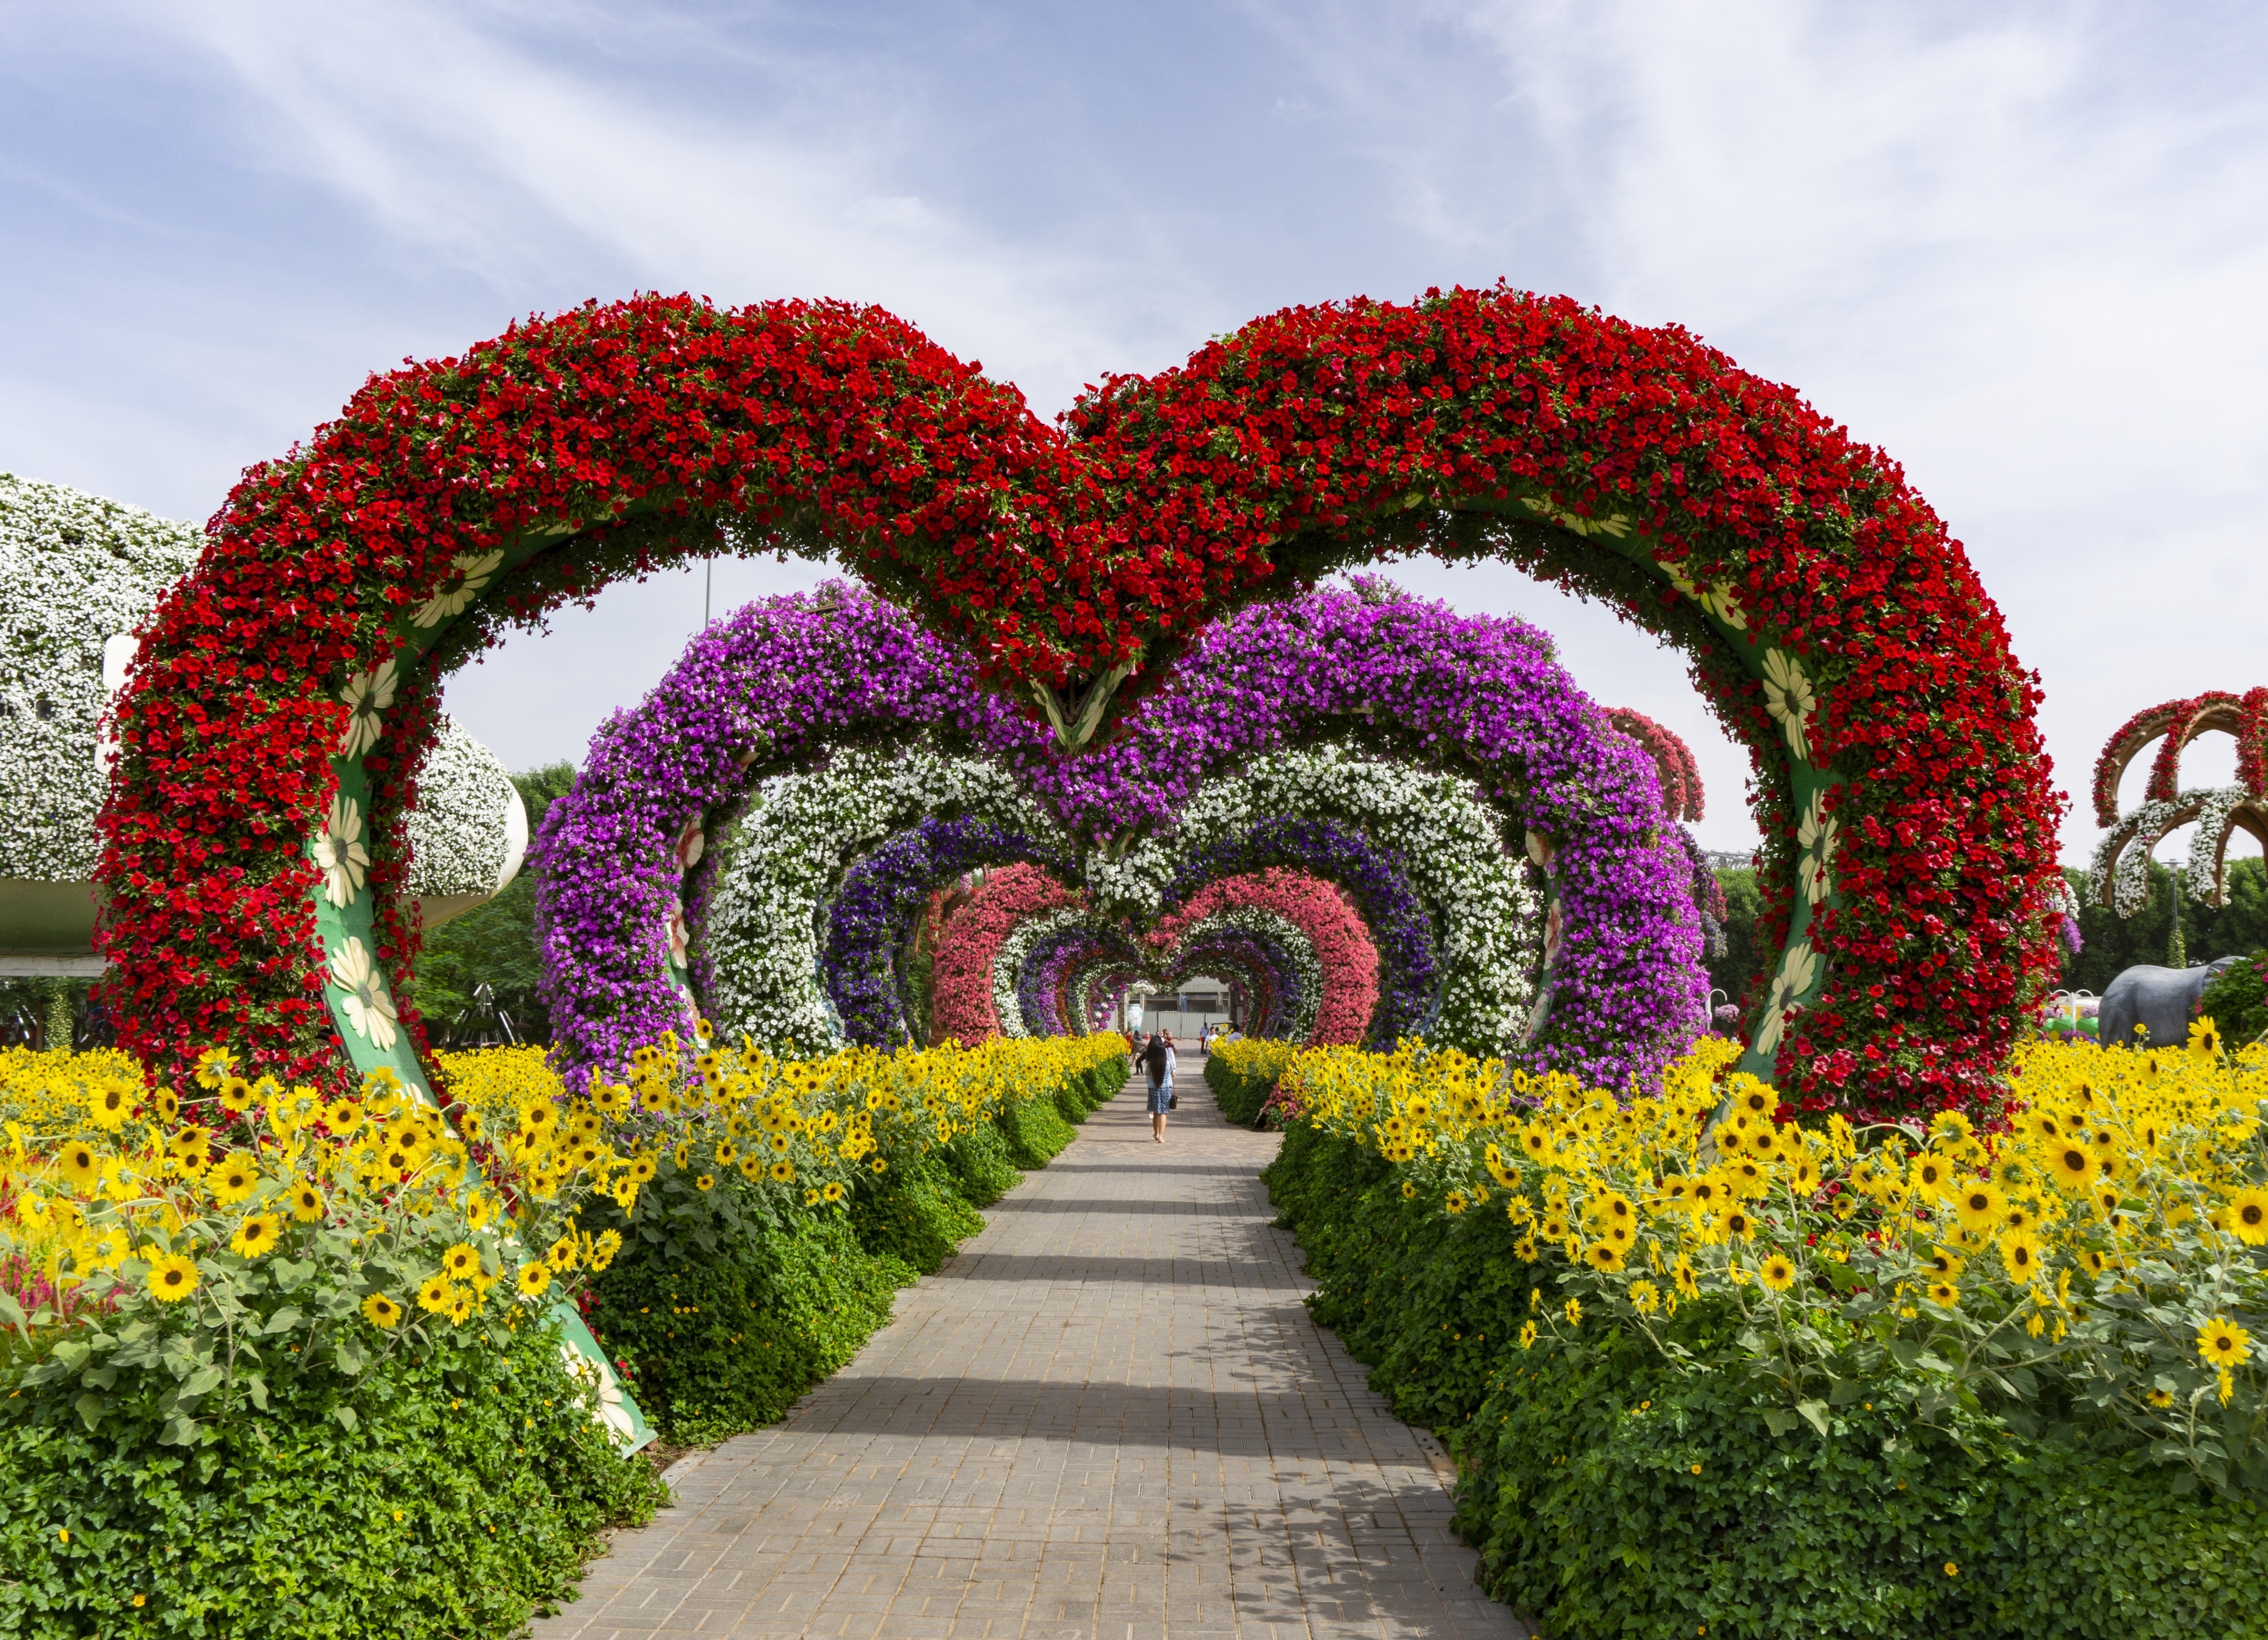 Dubai's Miracle Garden: The Chelsea Flower Show on steroids? - BBC News